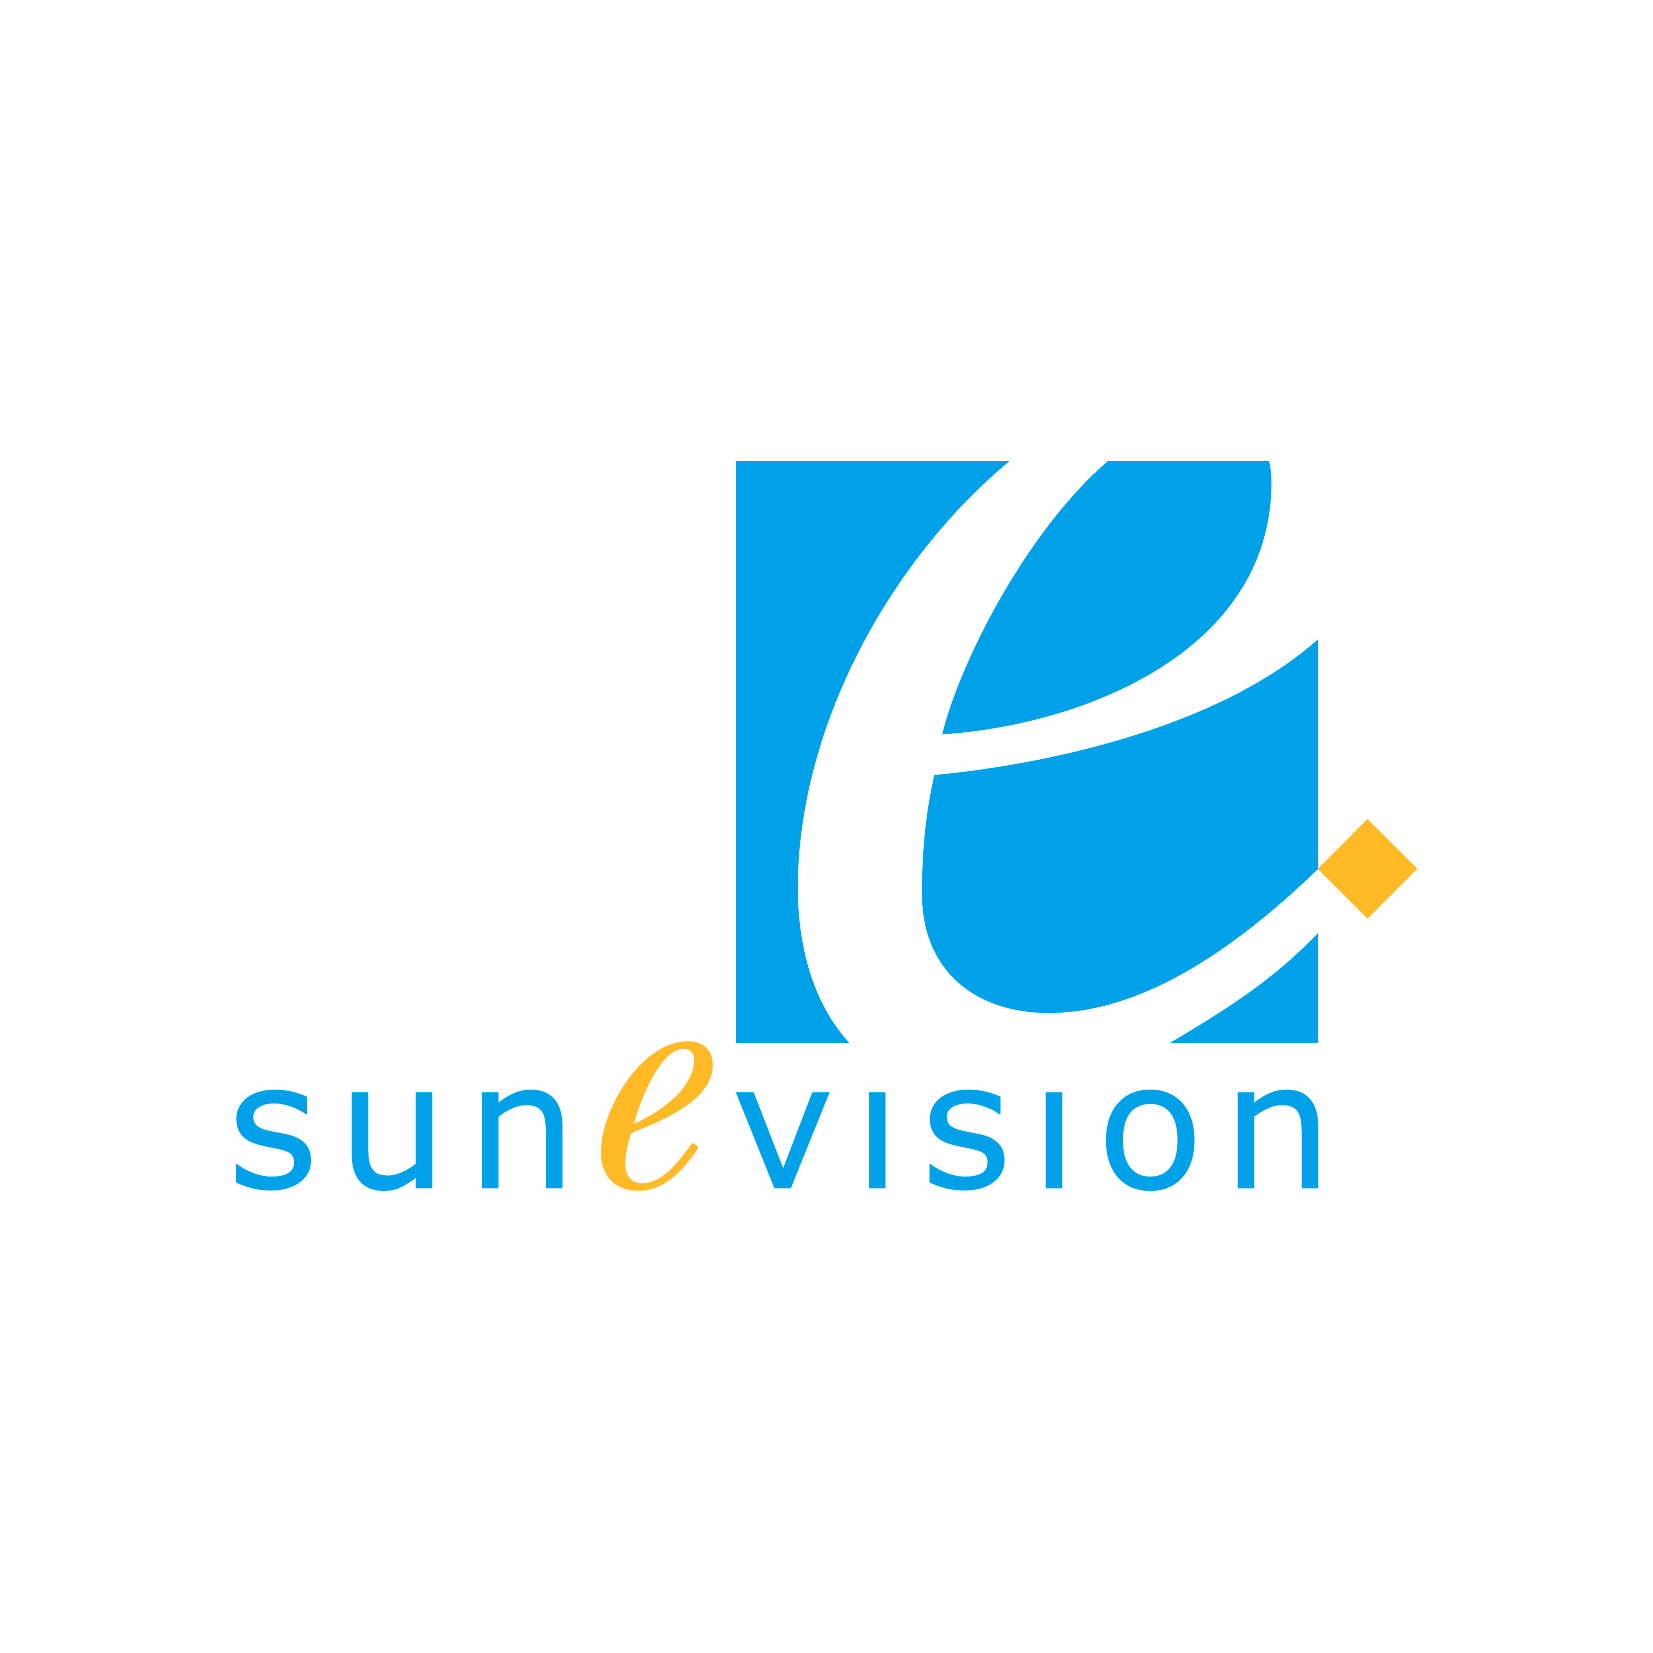 SUNeVision